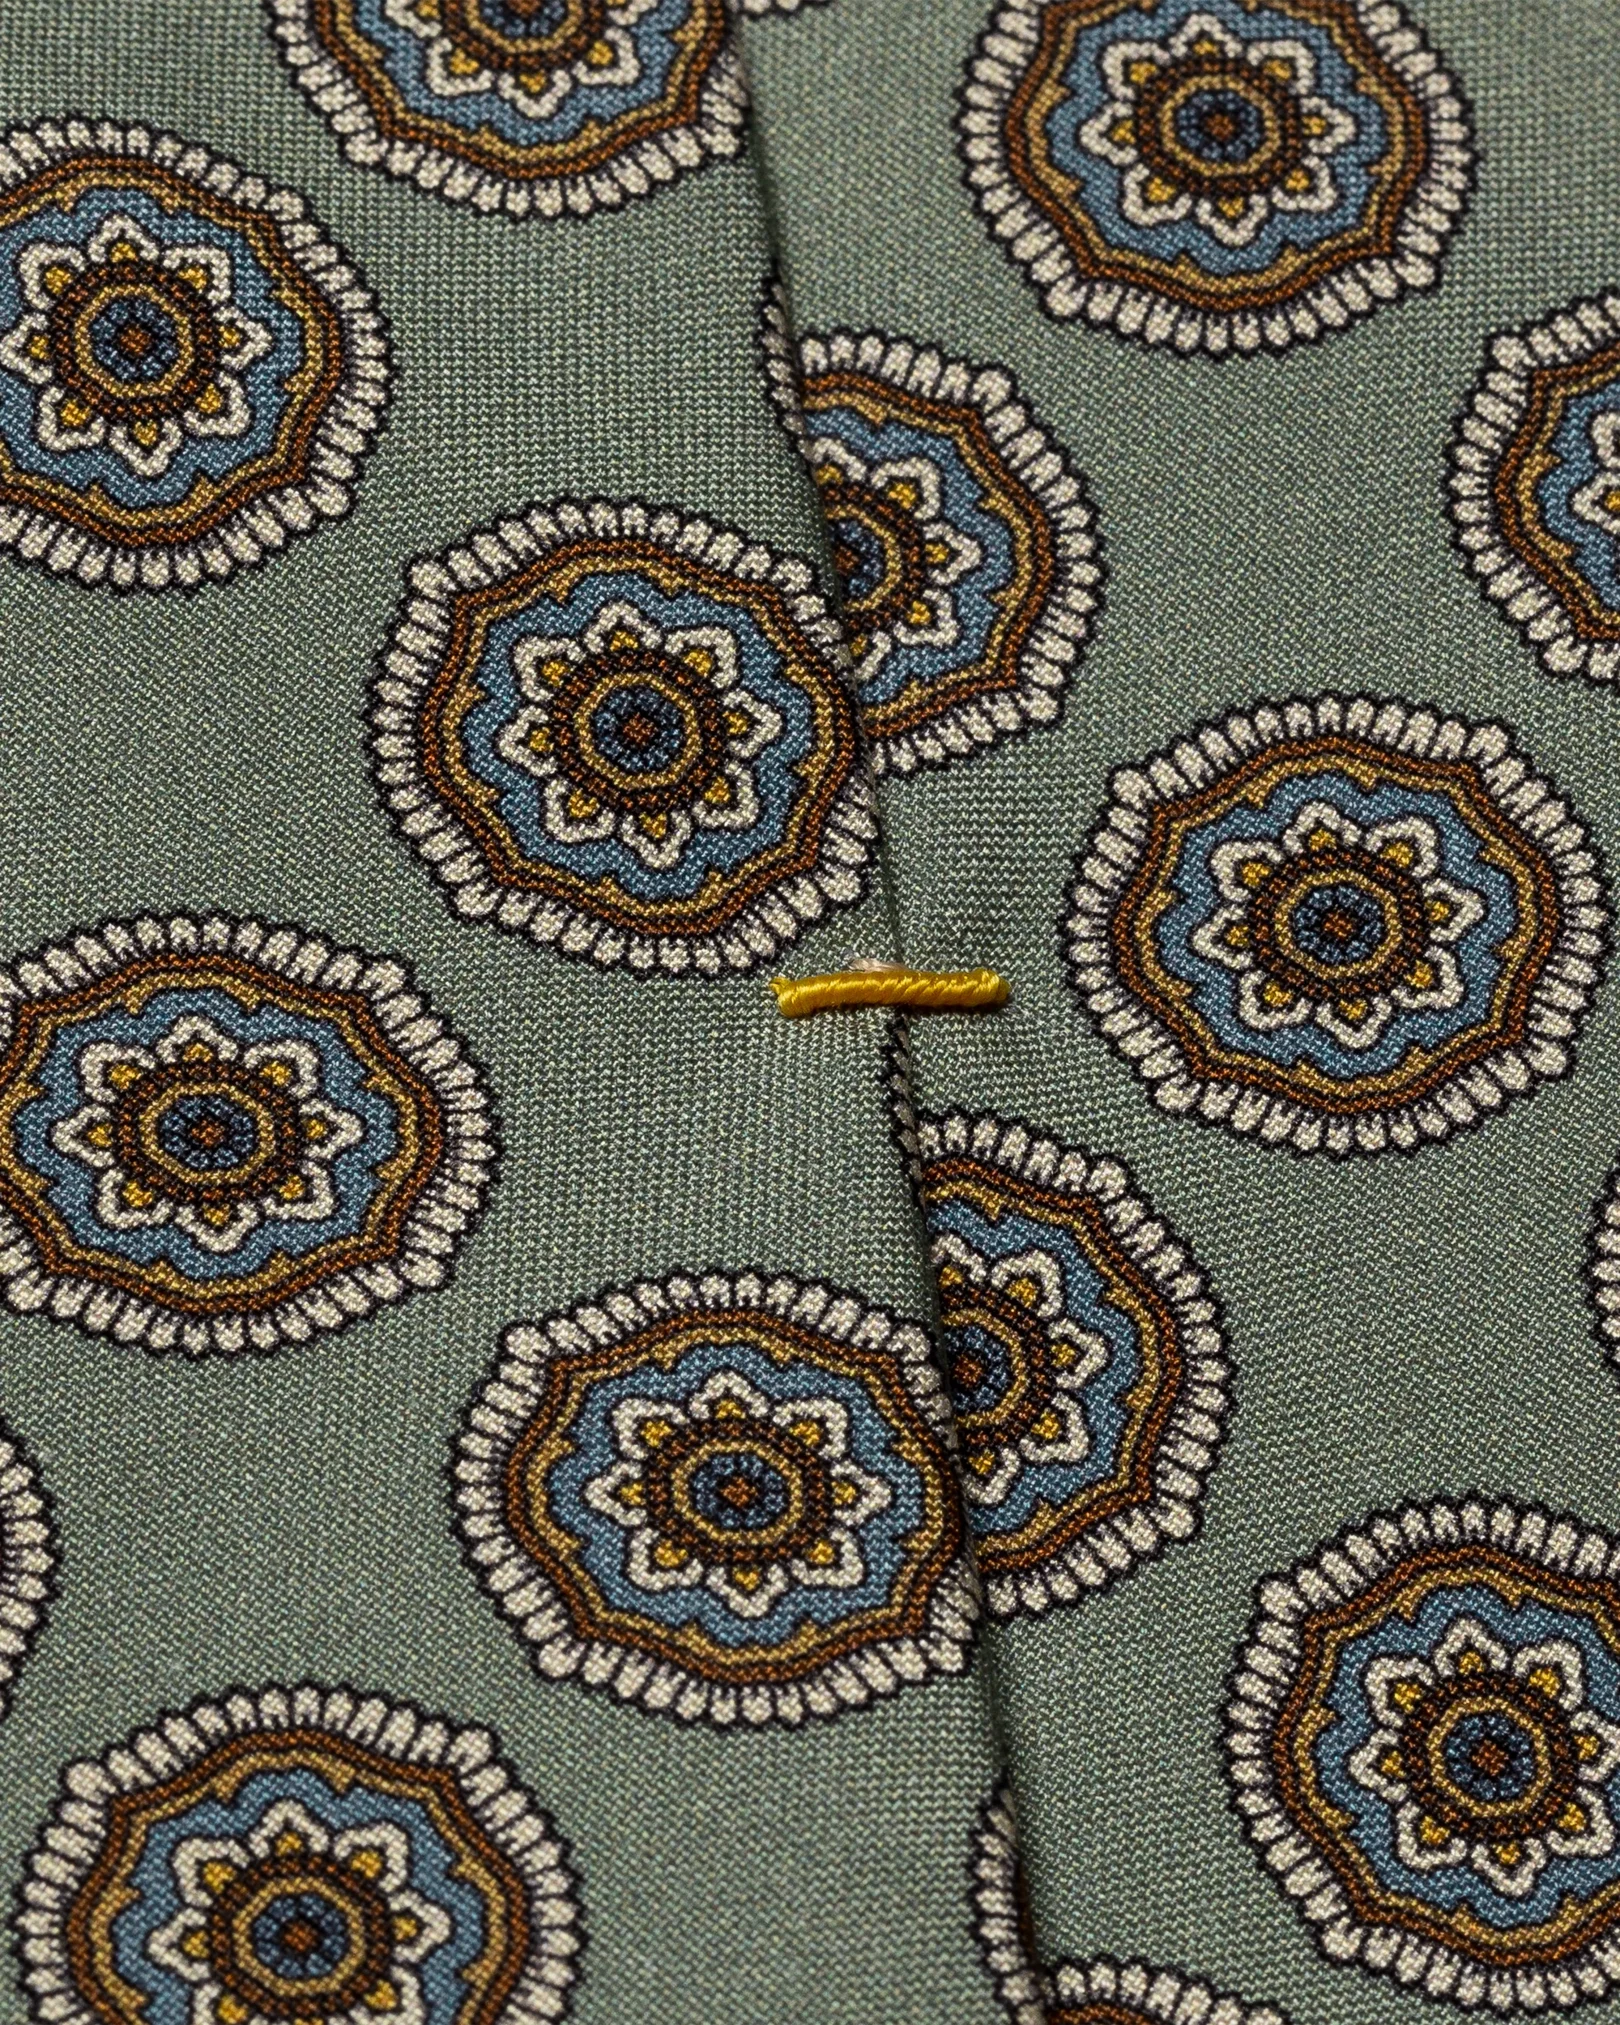 Eton - green geometric silk tie print